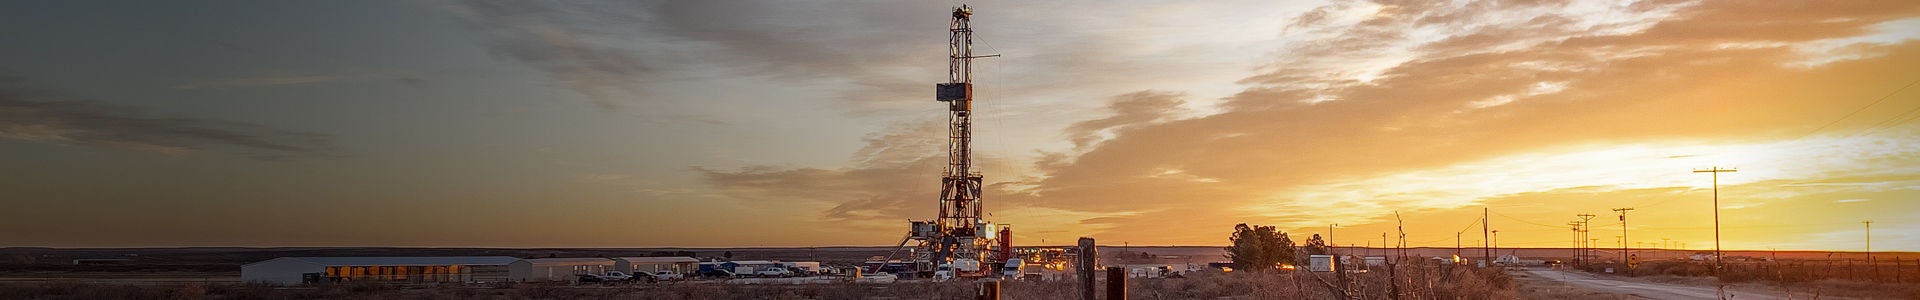 Land-based oil rig at sunset